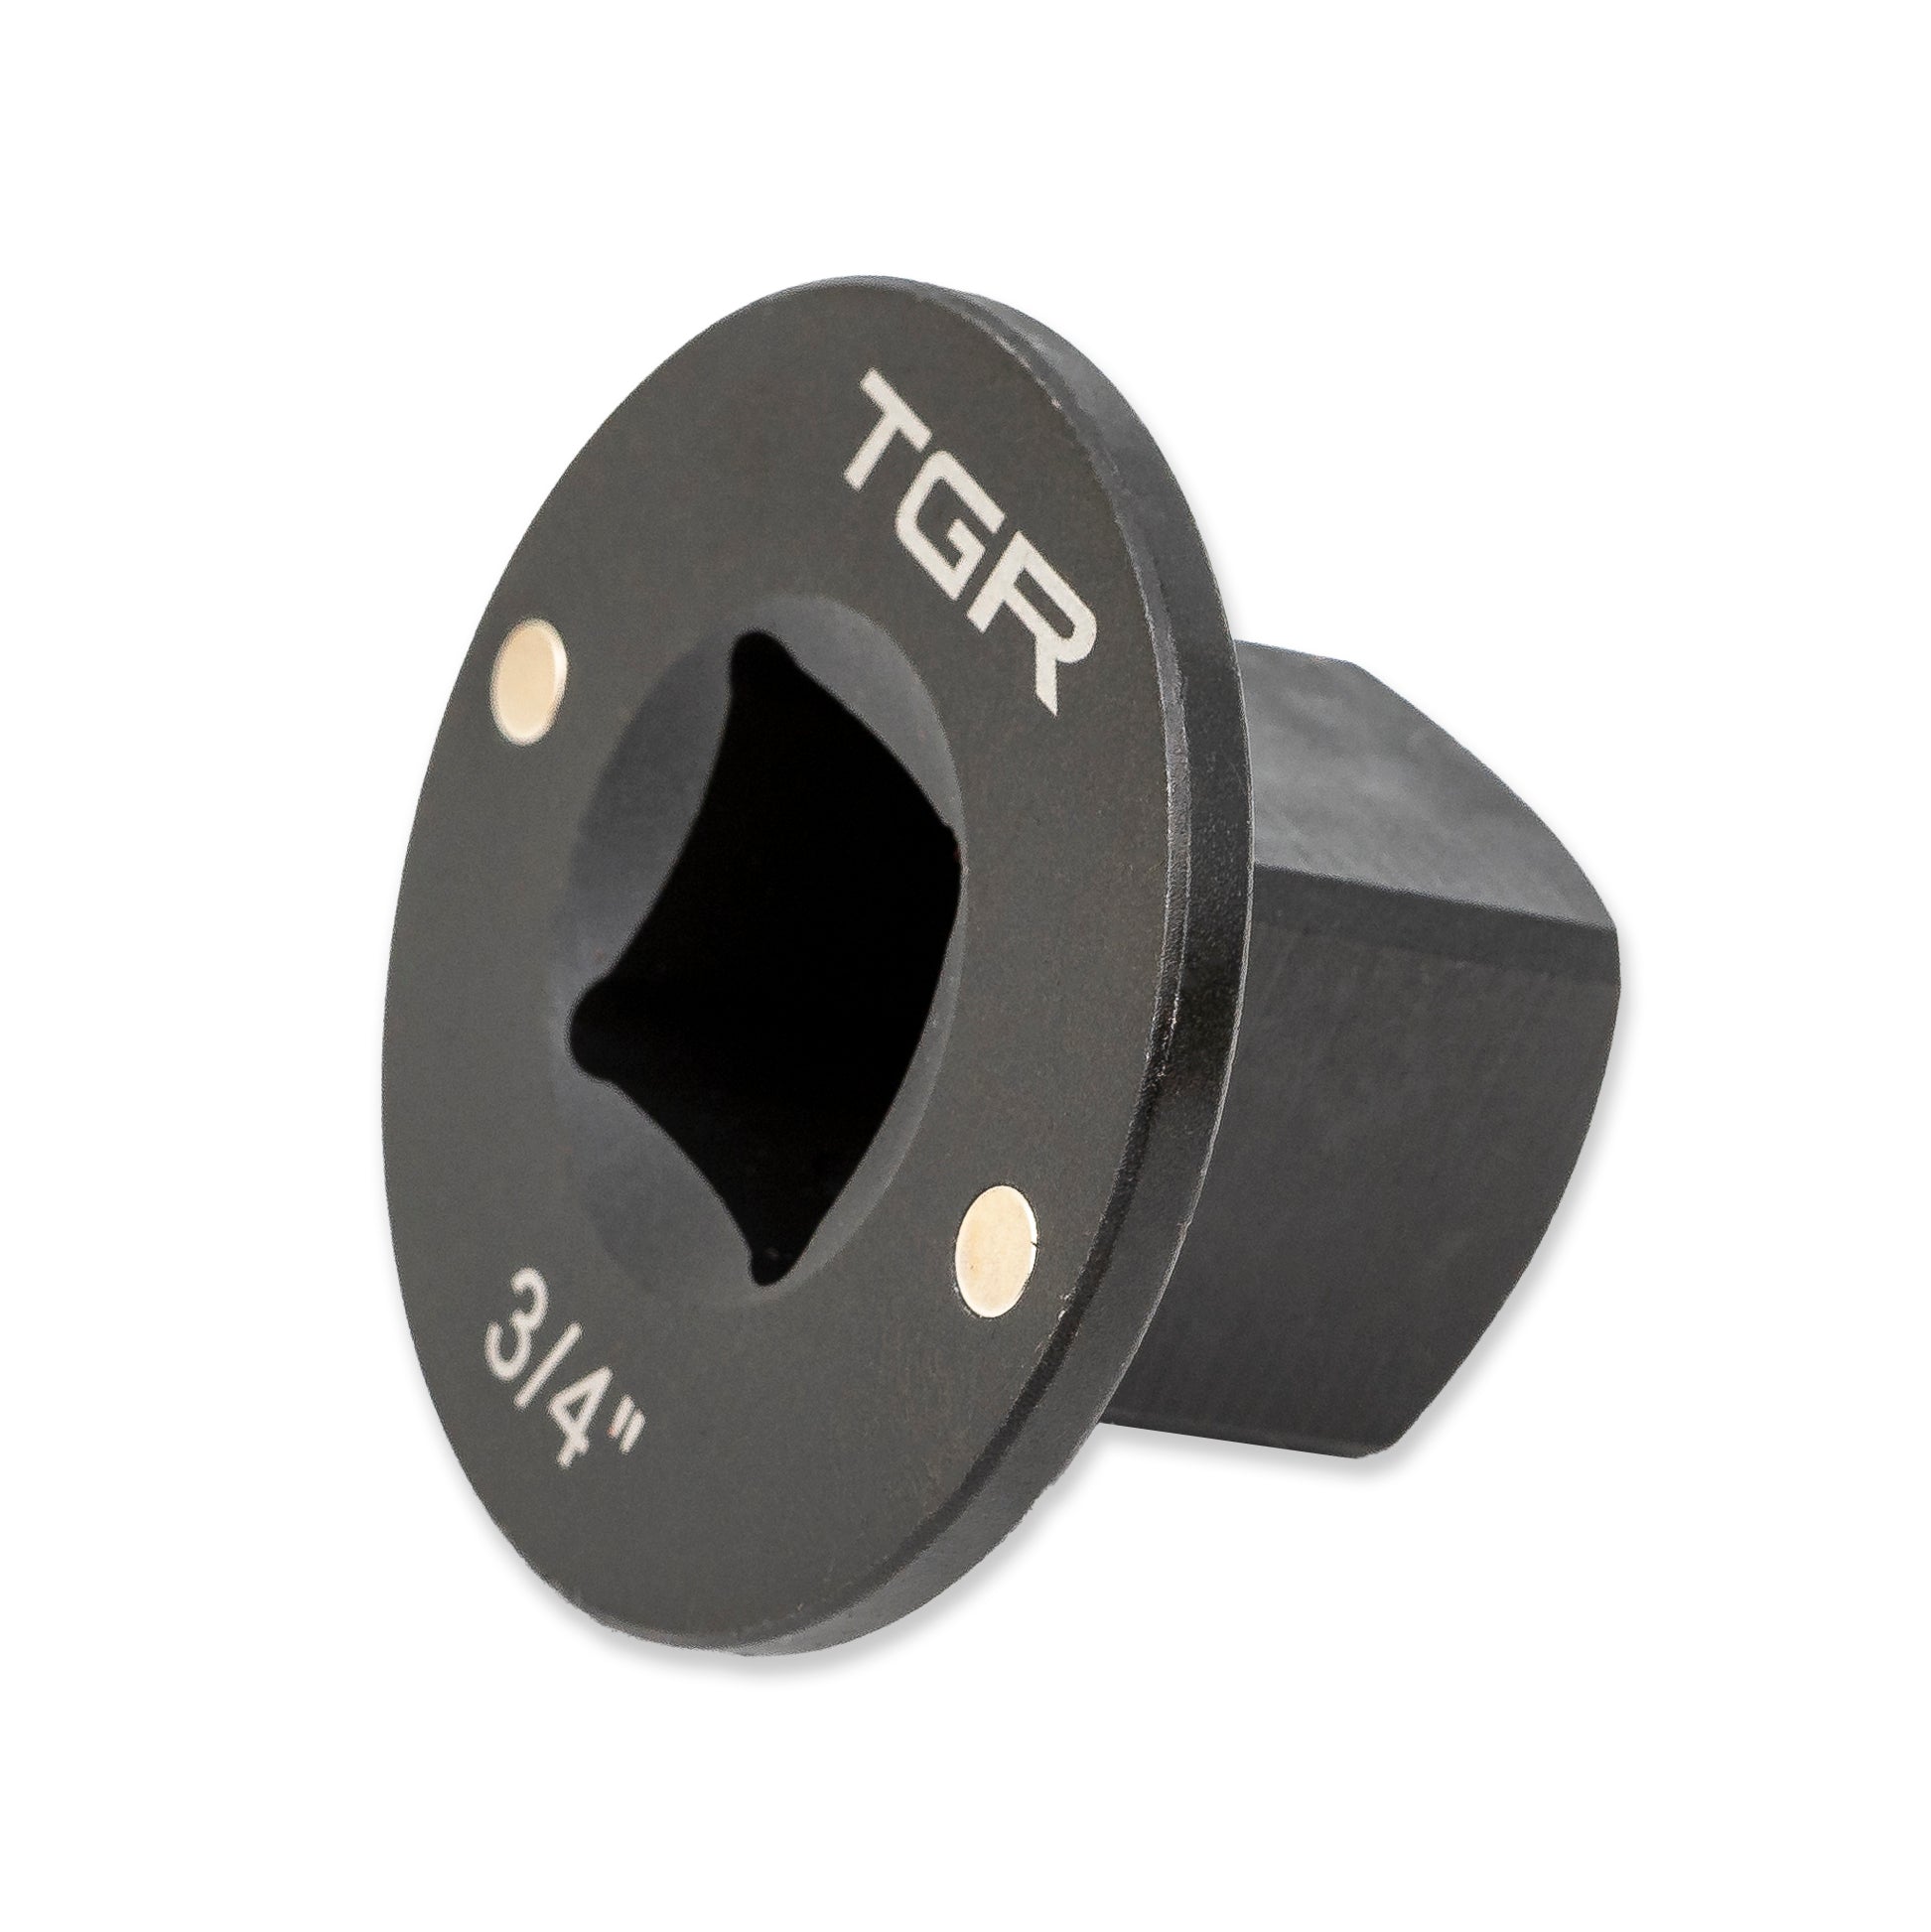 TGR Quick Adjustable Universal Thread Restorer 5/32” to 3/4”(4-19mm) for  External Thread Repair